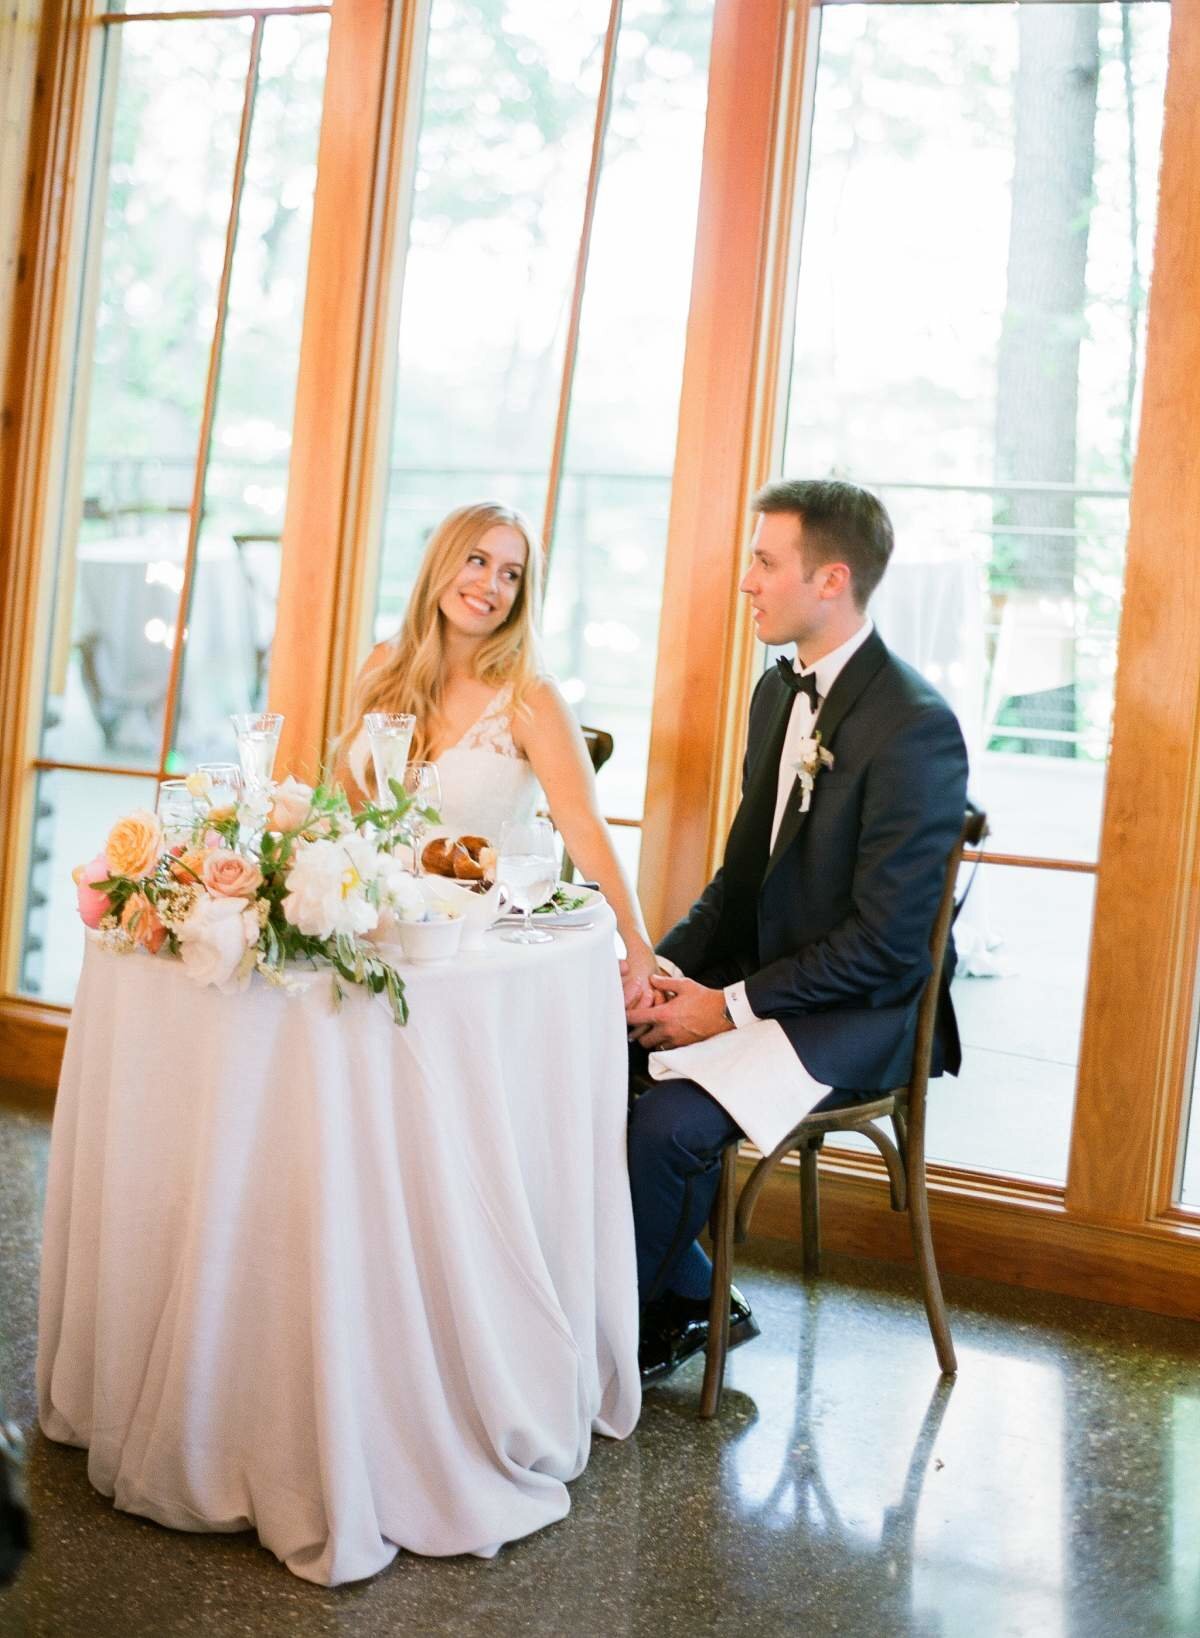 the-days-design-wedding-florist-sweetheart-table